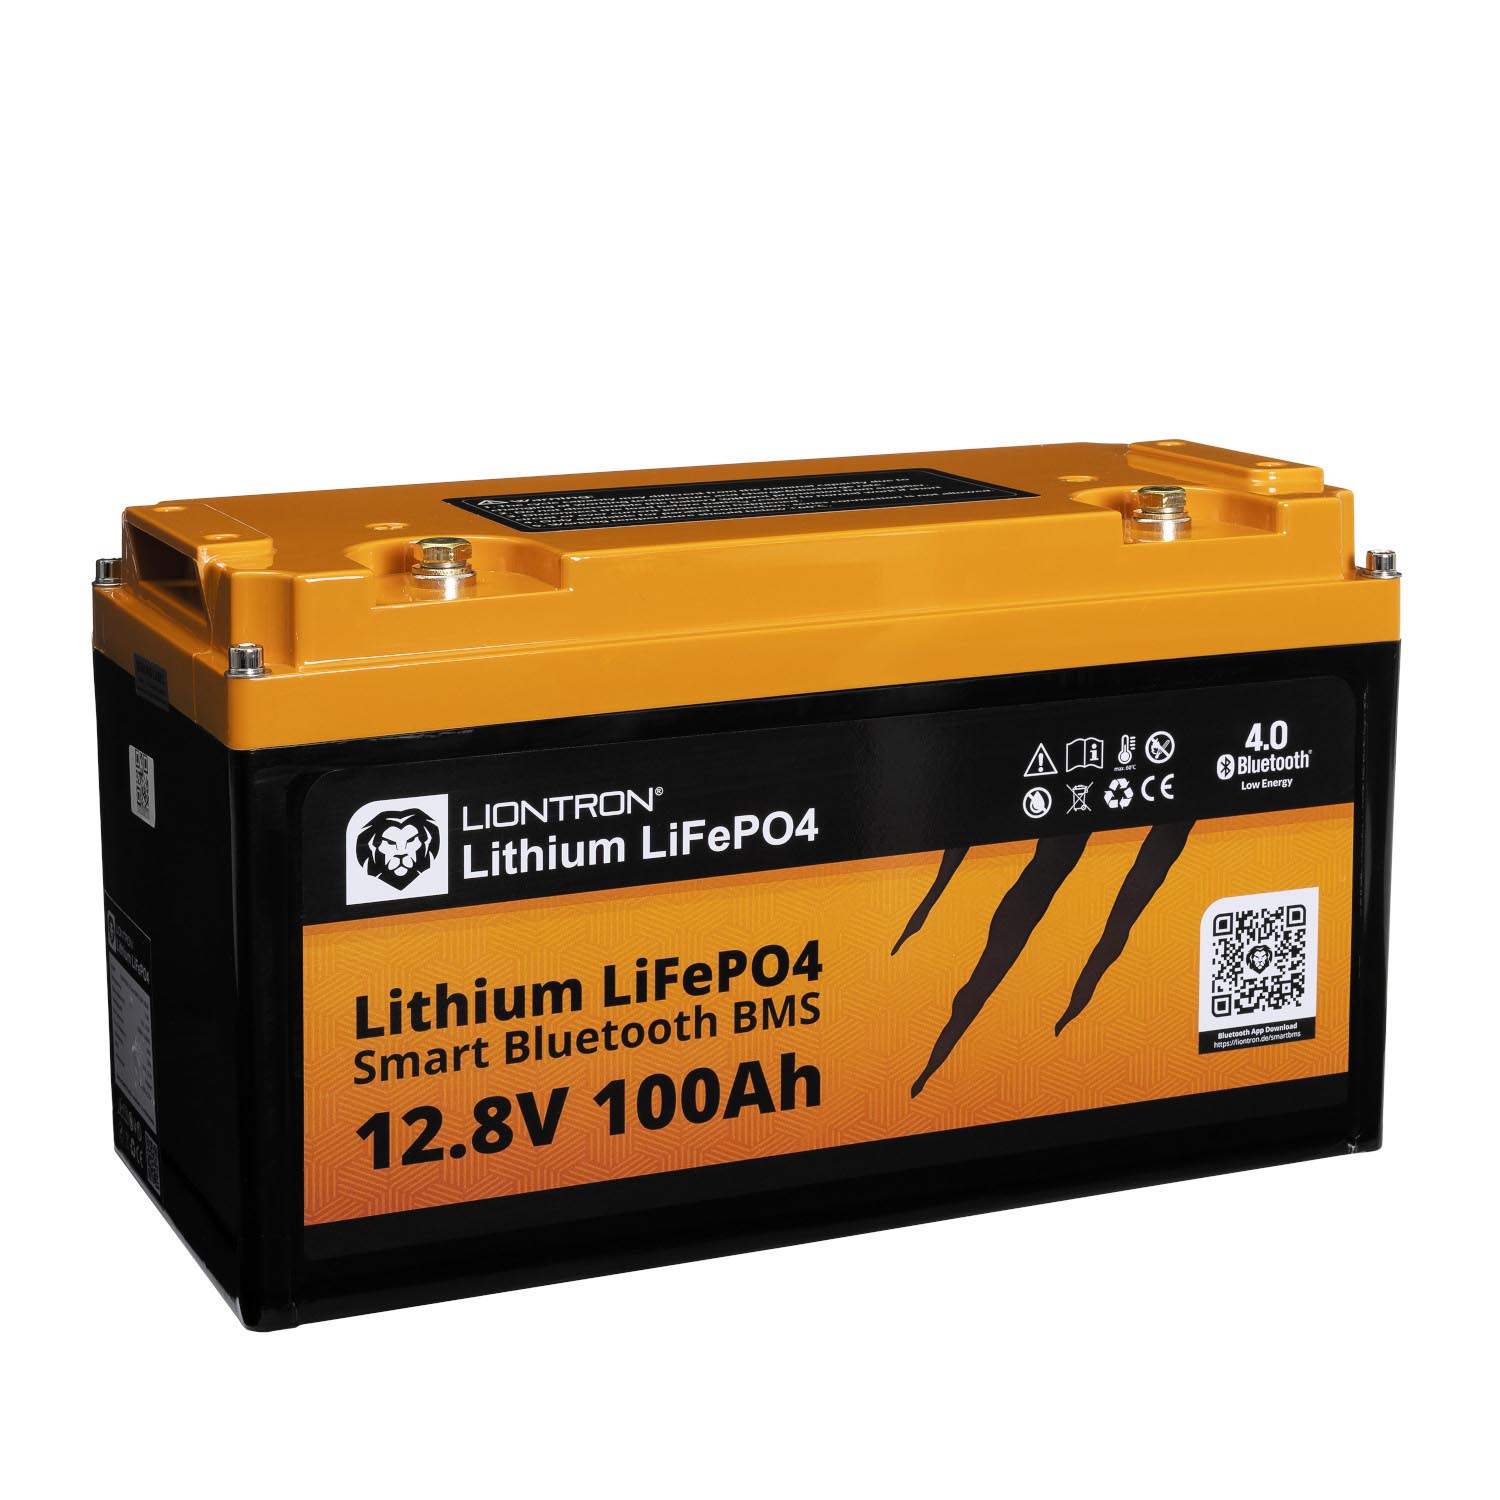 Liontron 100Ah 12V LiFePO4 Lithium Batterie Wohnmobil BMS mit App Arctic (USt-befreit nach §12 Abs.3 Nr. 1 S.1 UStG)